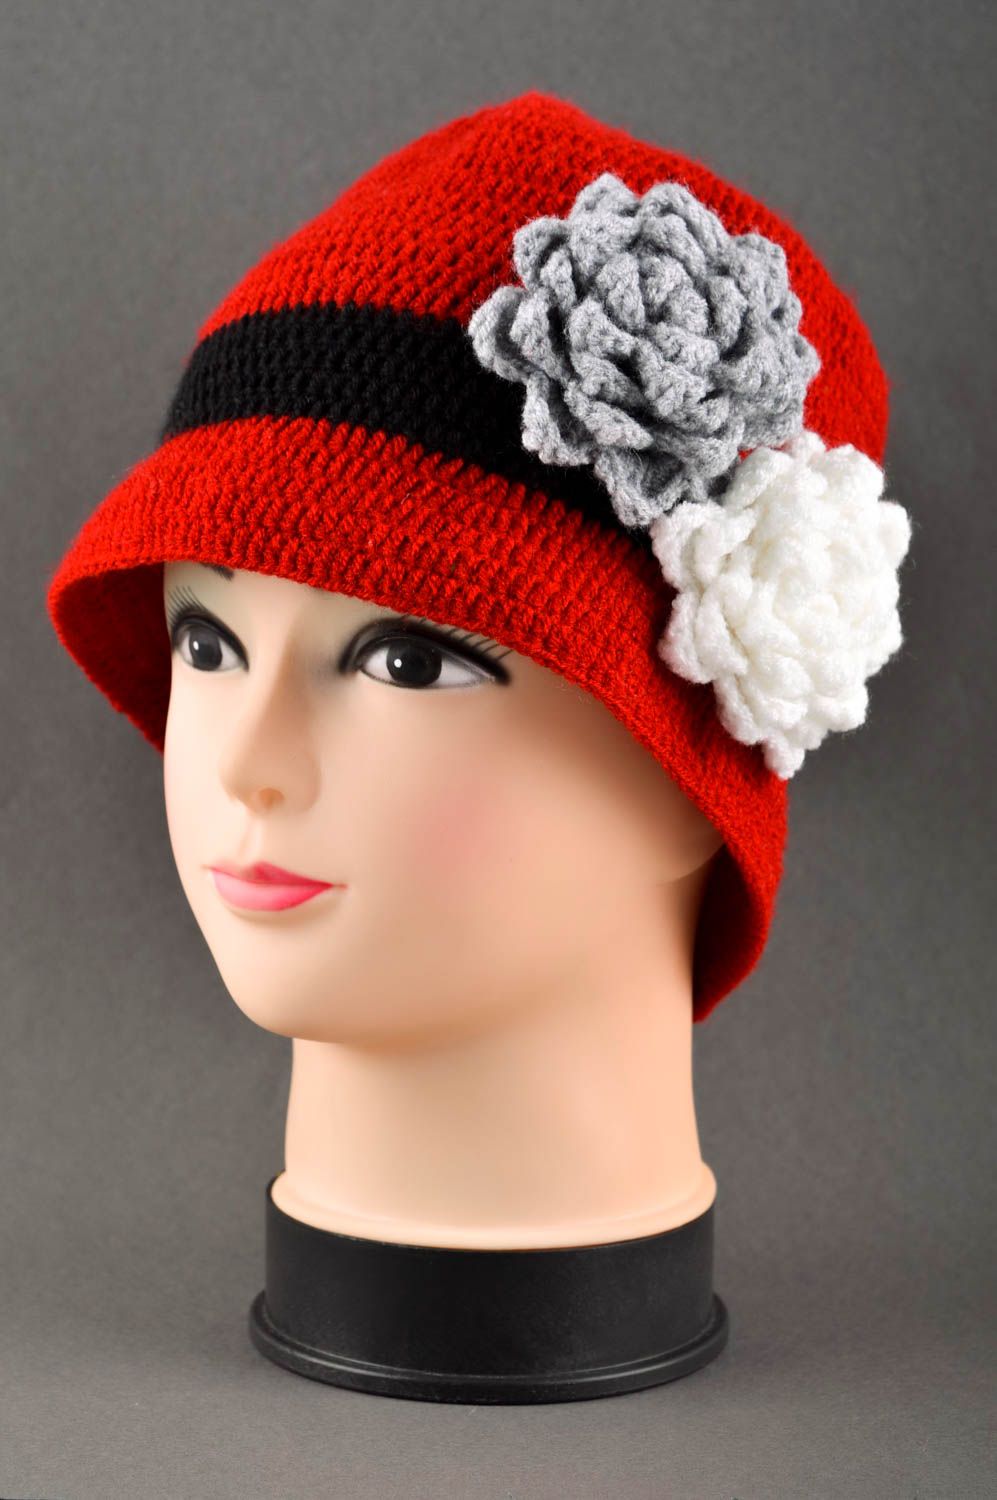 Handmade winter hat designer cap for girl gift ideas warm hat knitted hat photo 1